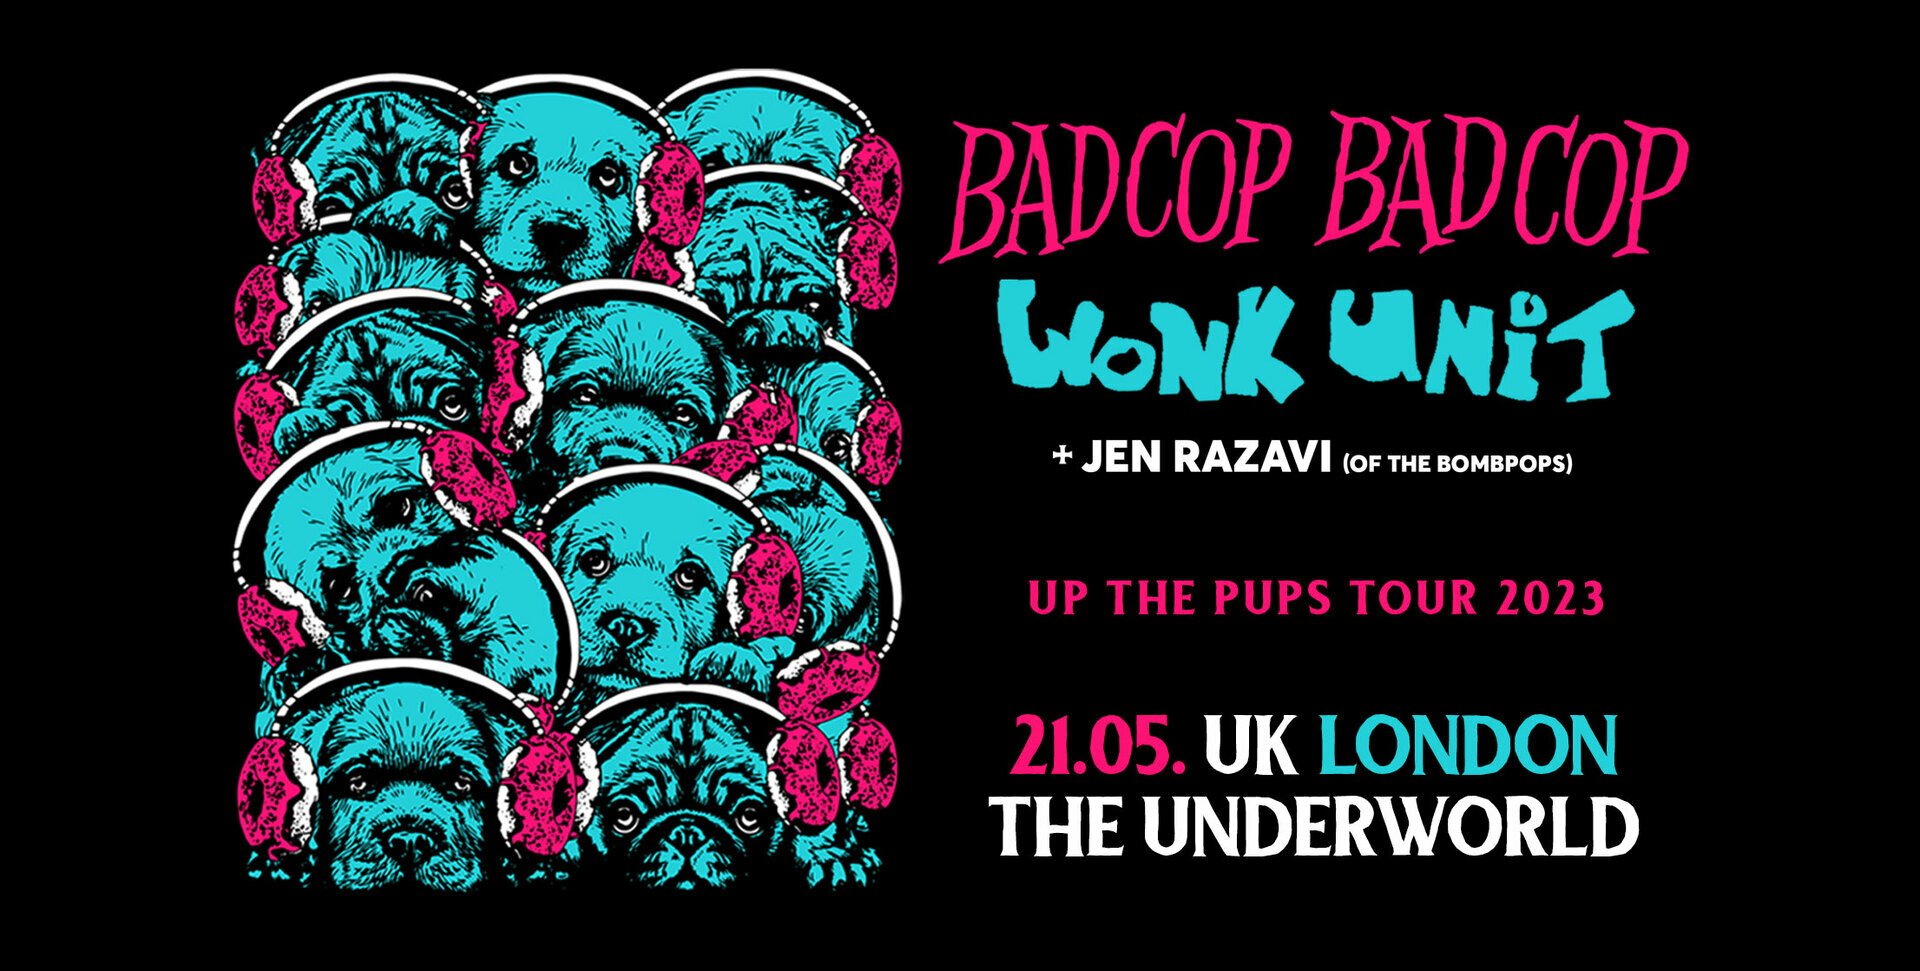 BAD COP BAD COP // WONK UNIT at The Underworld - London, London, England, United Kingdom